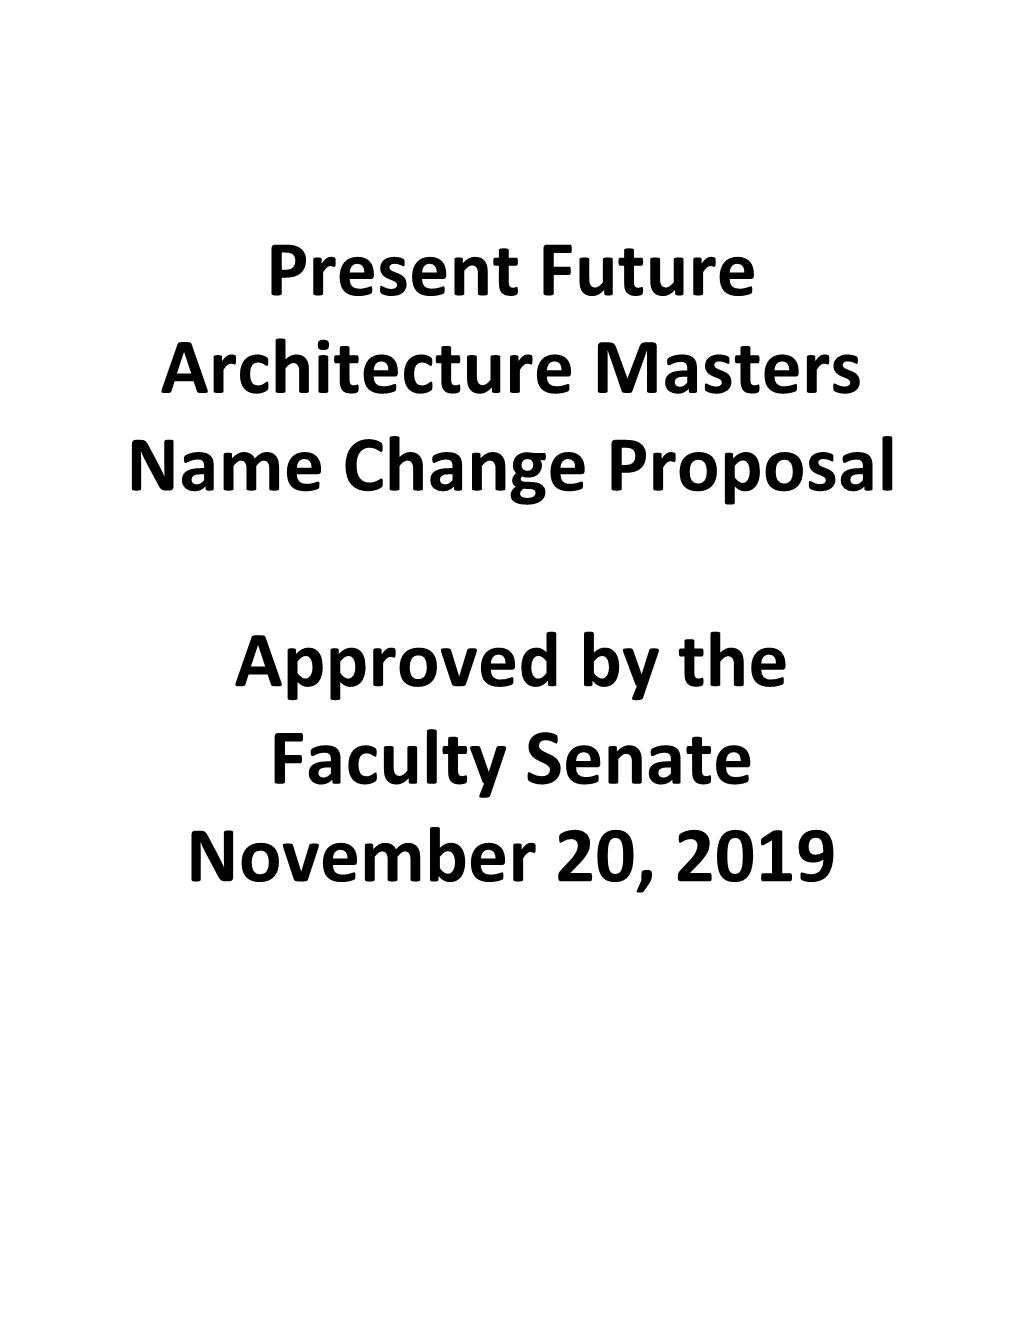 Rice Architecture Present Future Name Change Proposal